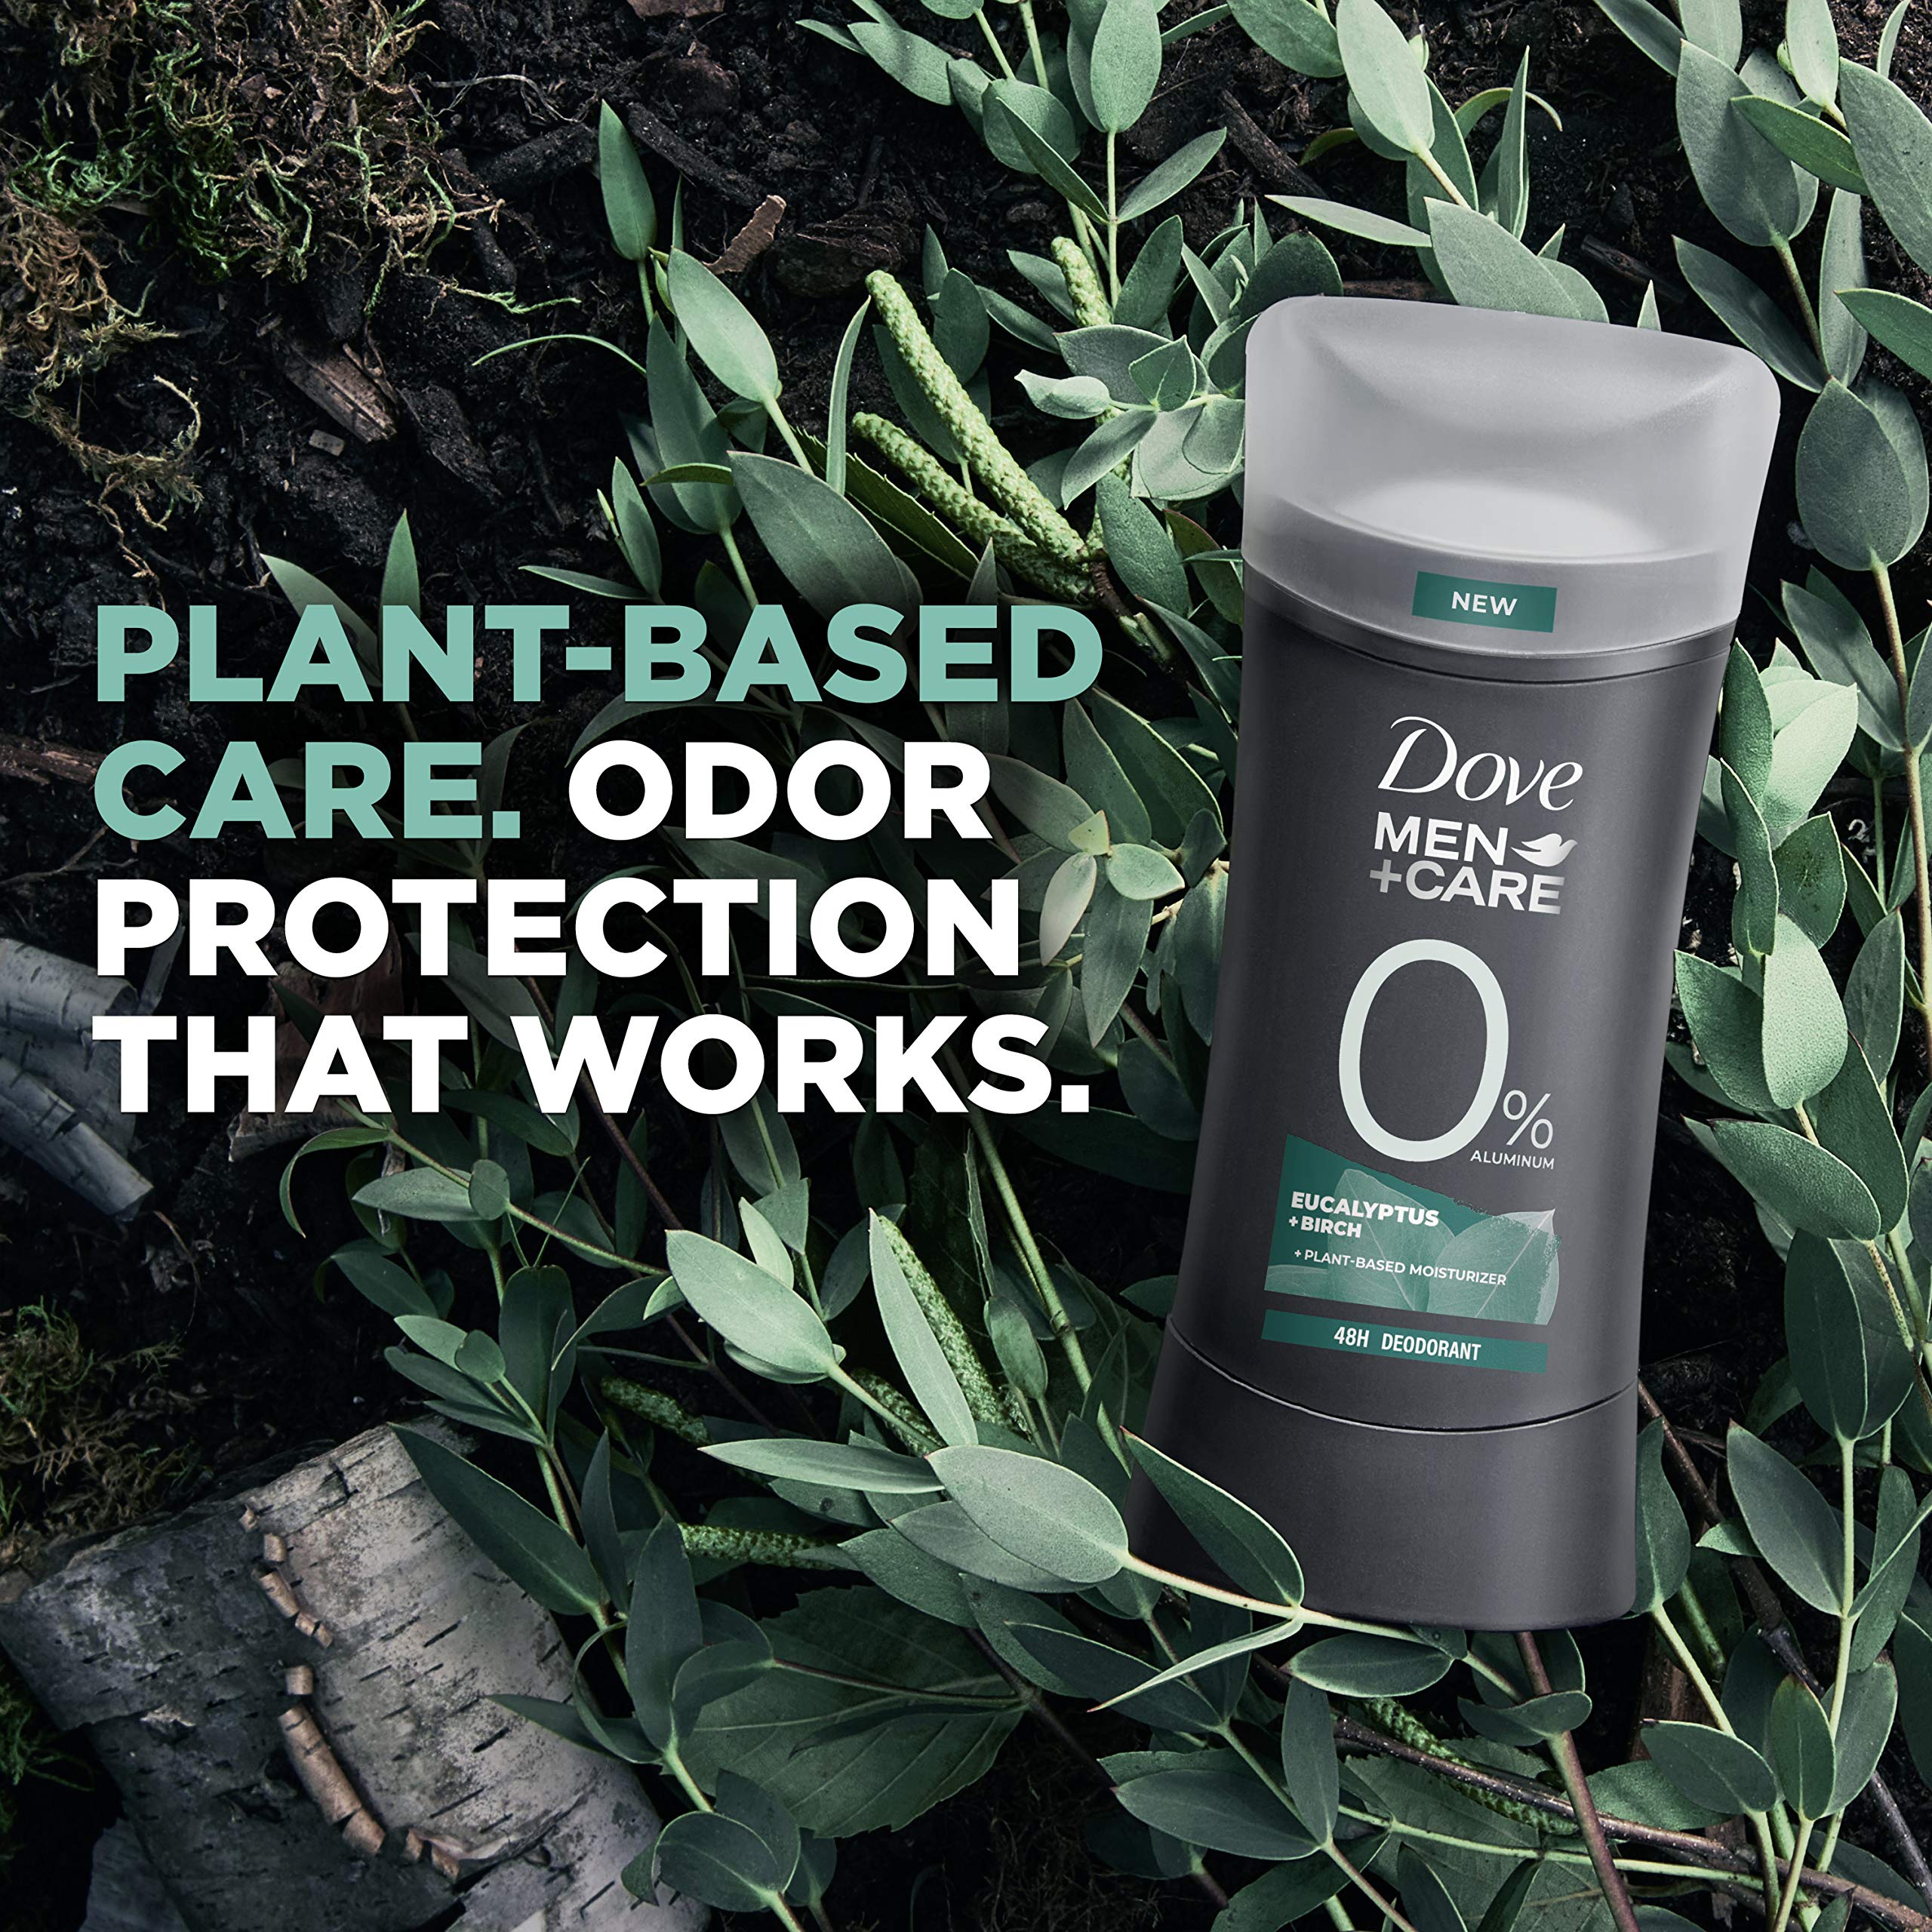 Dove Men+Care 0% Deodorant Stick for Men Aluminum free deodorant Eucalyptus+Birch Naturally Derived Plant Based Moisturizer, GRAY, 2.6 Ounce (Pack of 4)